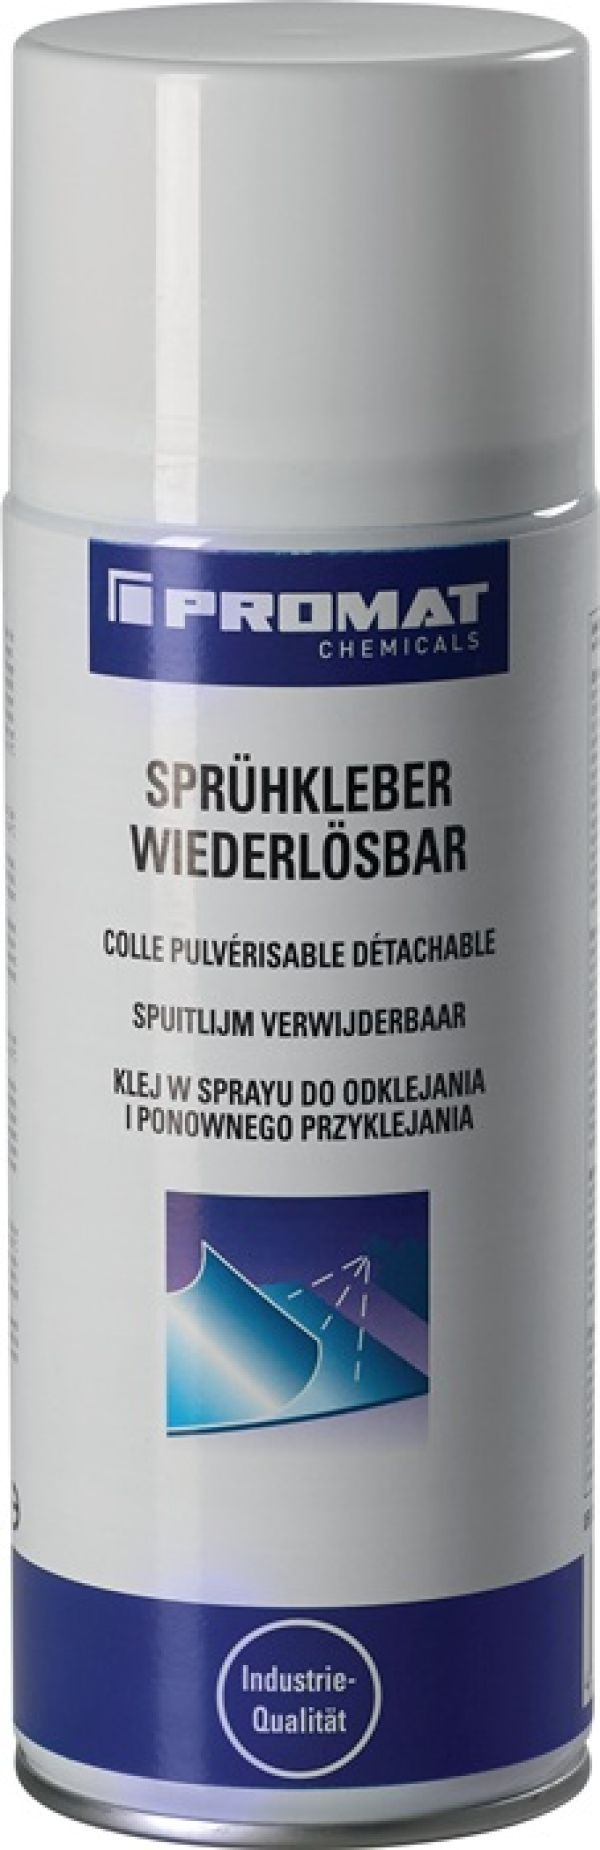 Sprühkleber wiederlösbar transp.400 ml Spraydose PROMAT CHEMICALS